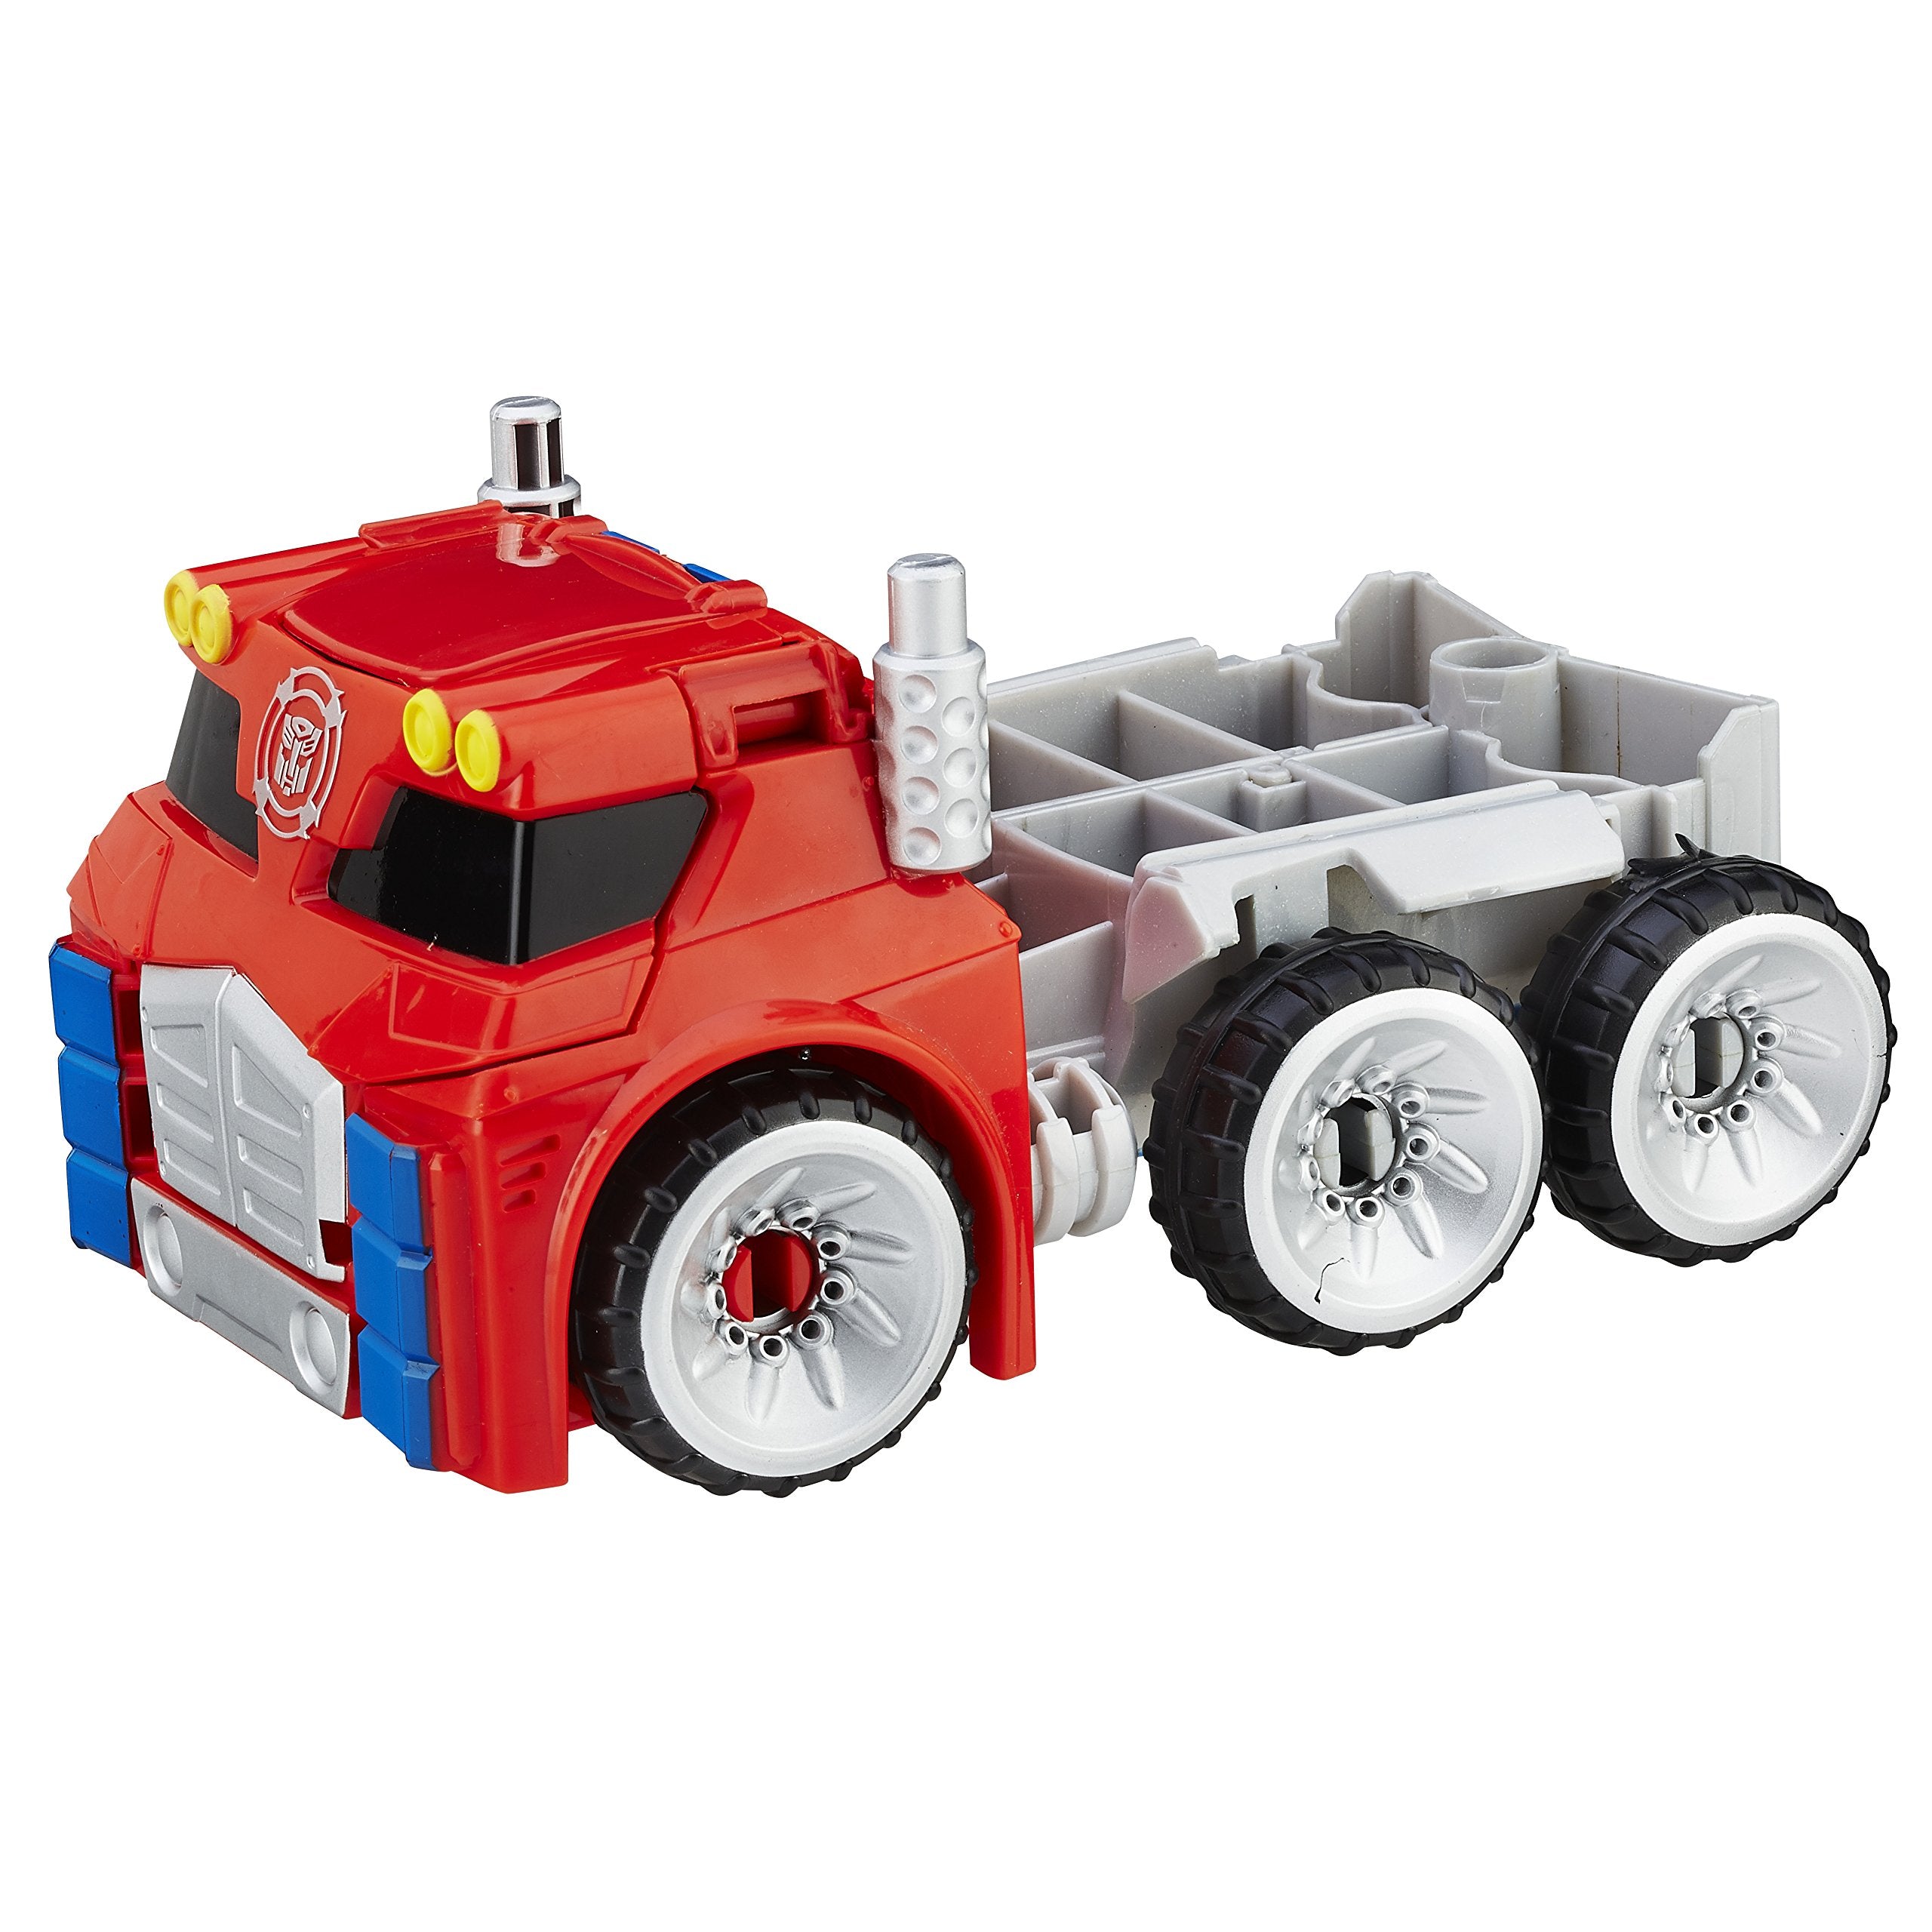 Transformers Rescue Bots Megabot Assortment